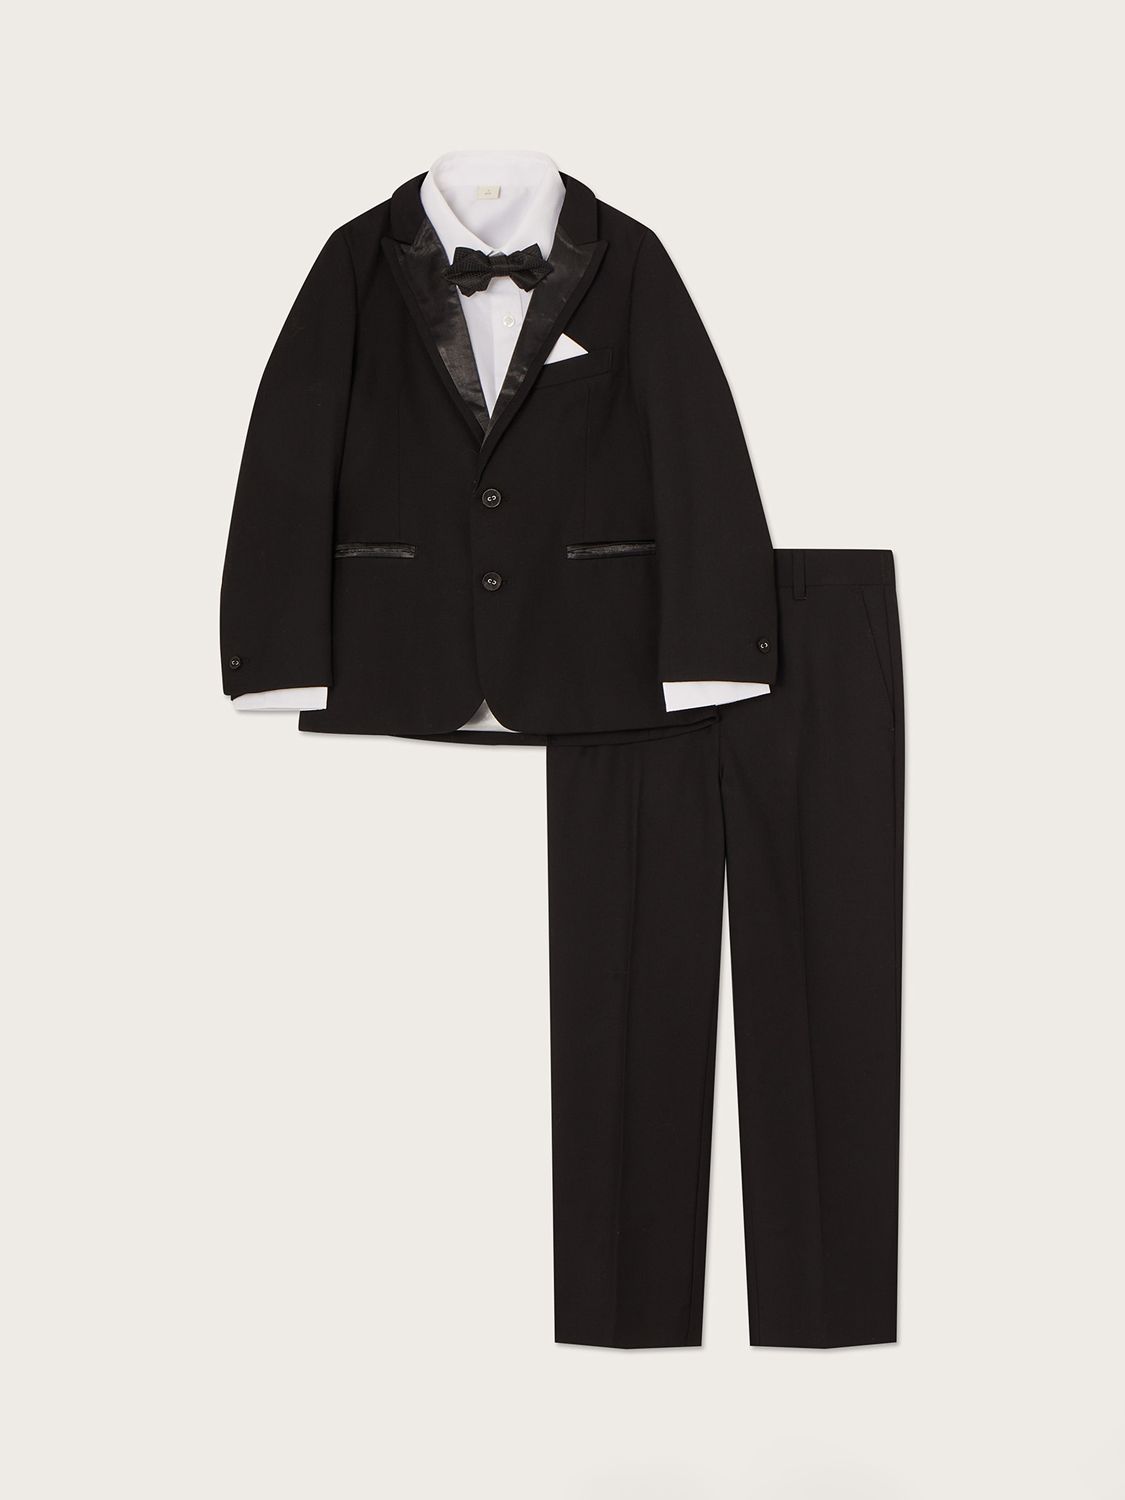 Monsoon Kids' Benjamin Four-Piece Suit, Black at John Lewis & Partners